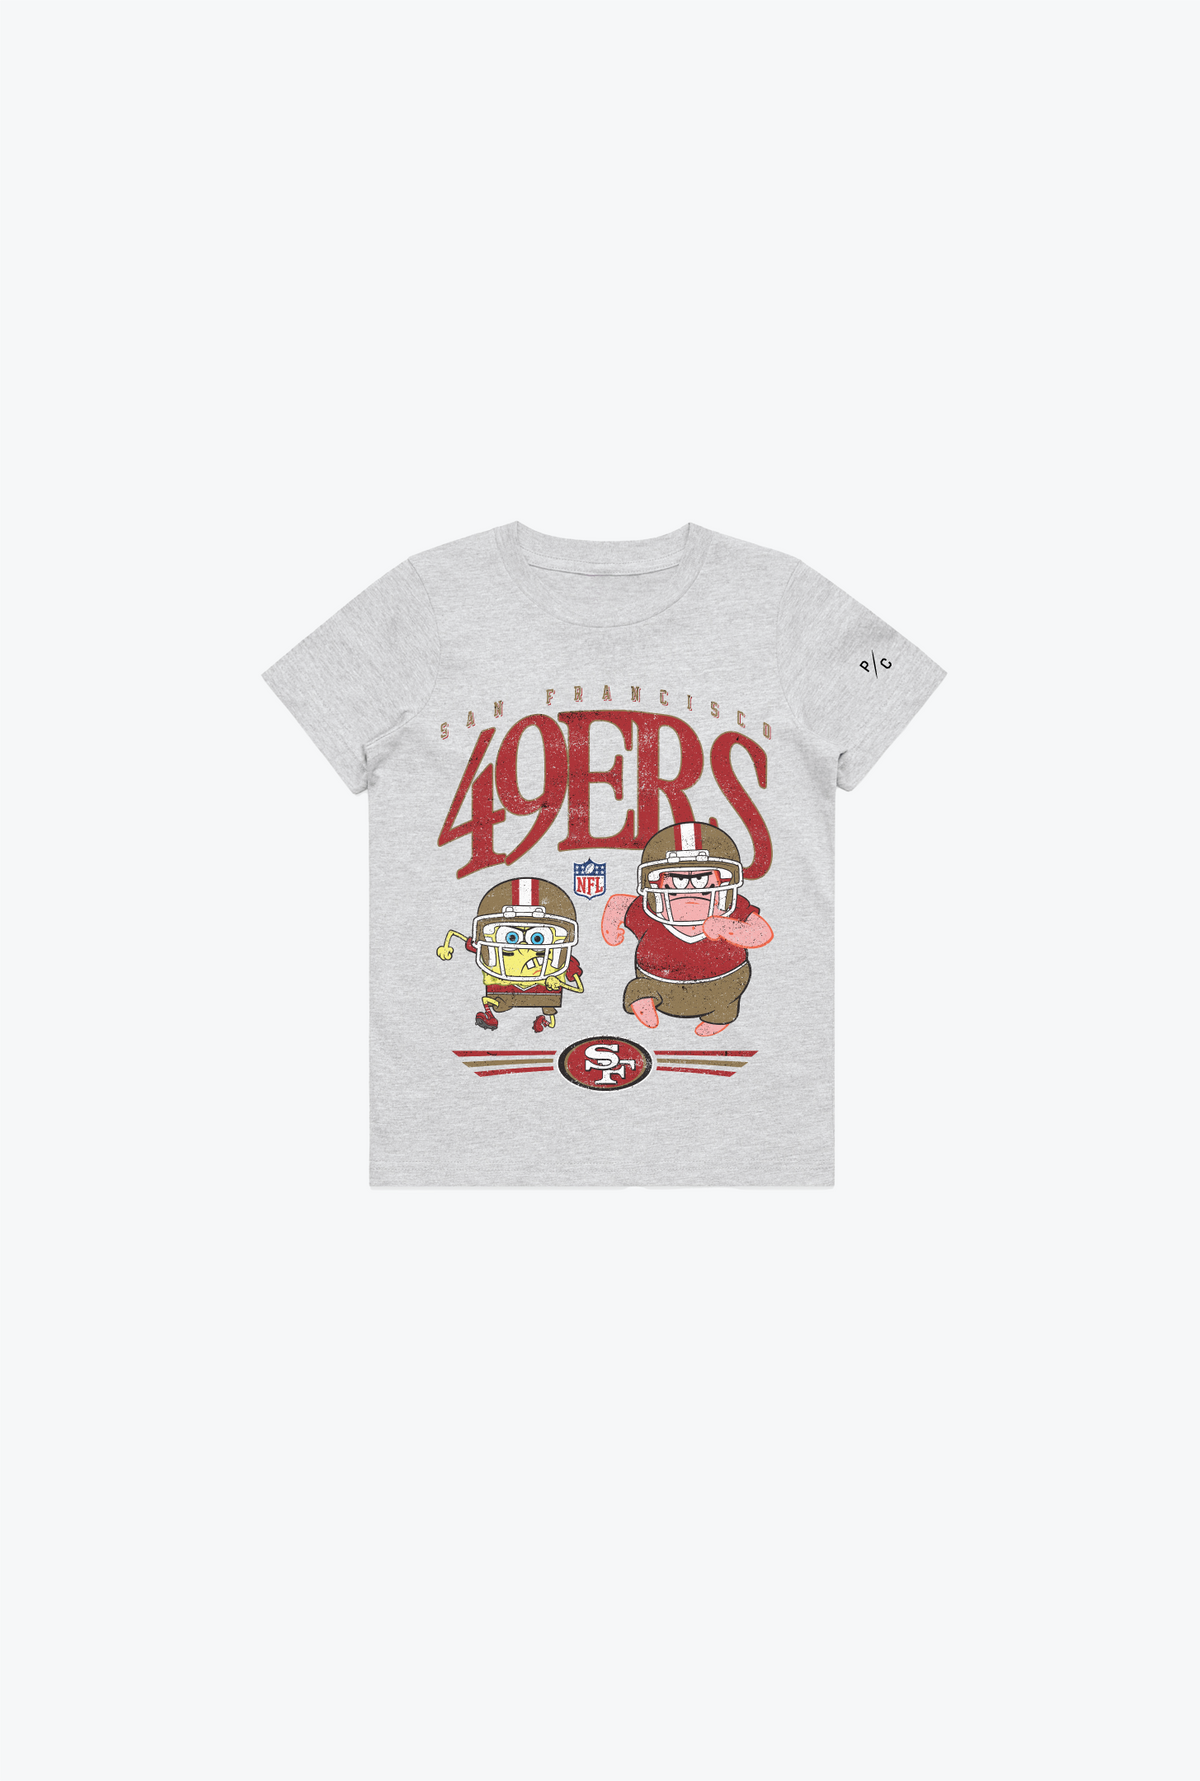 Spongebob & Patrick Rush Kids T-Shirt - San Francisco 49ers